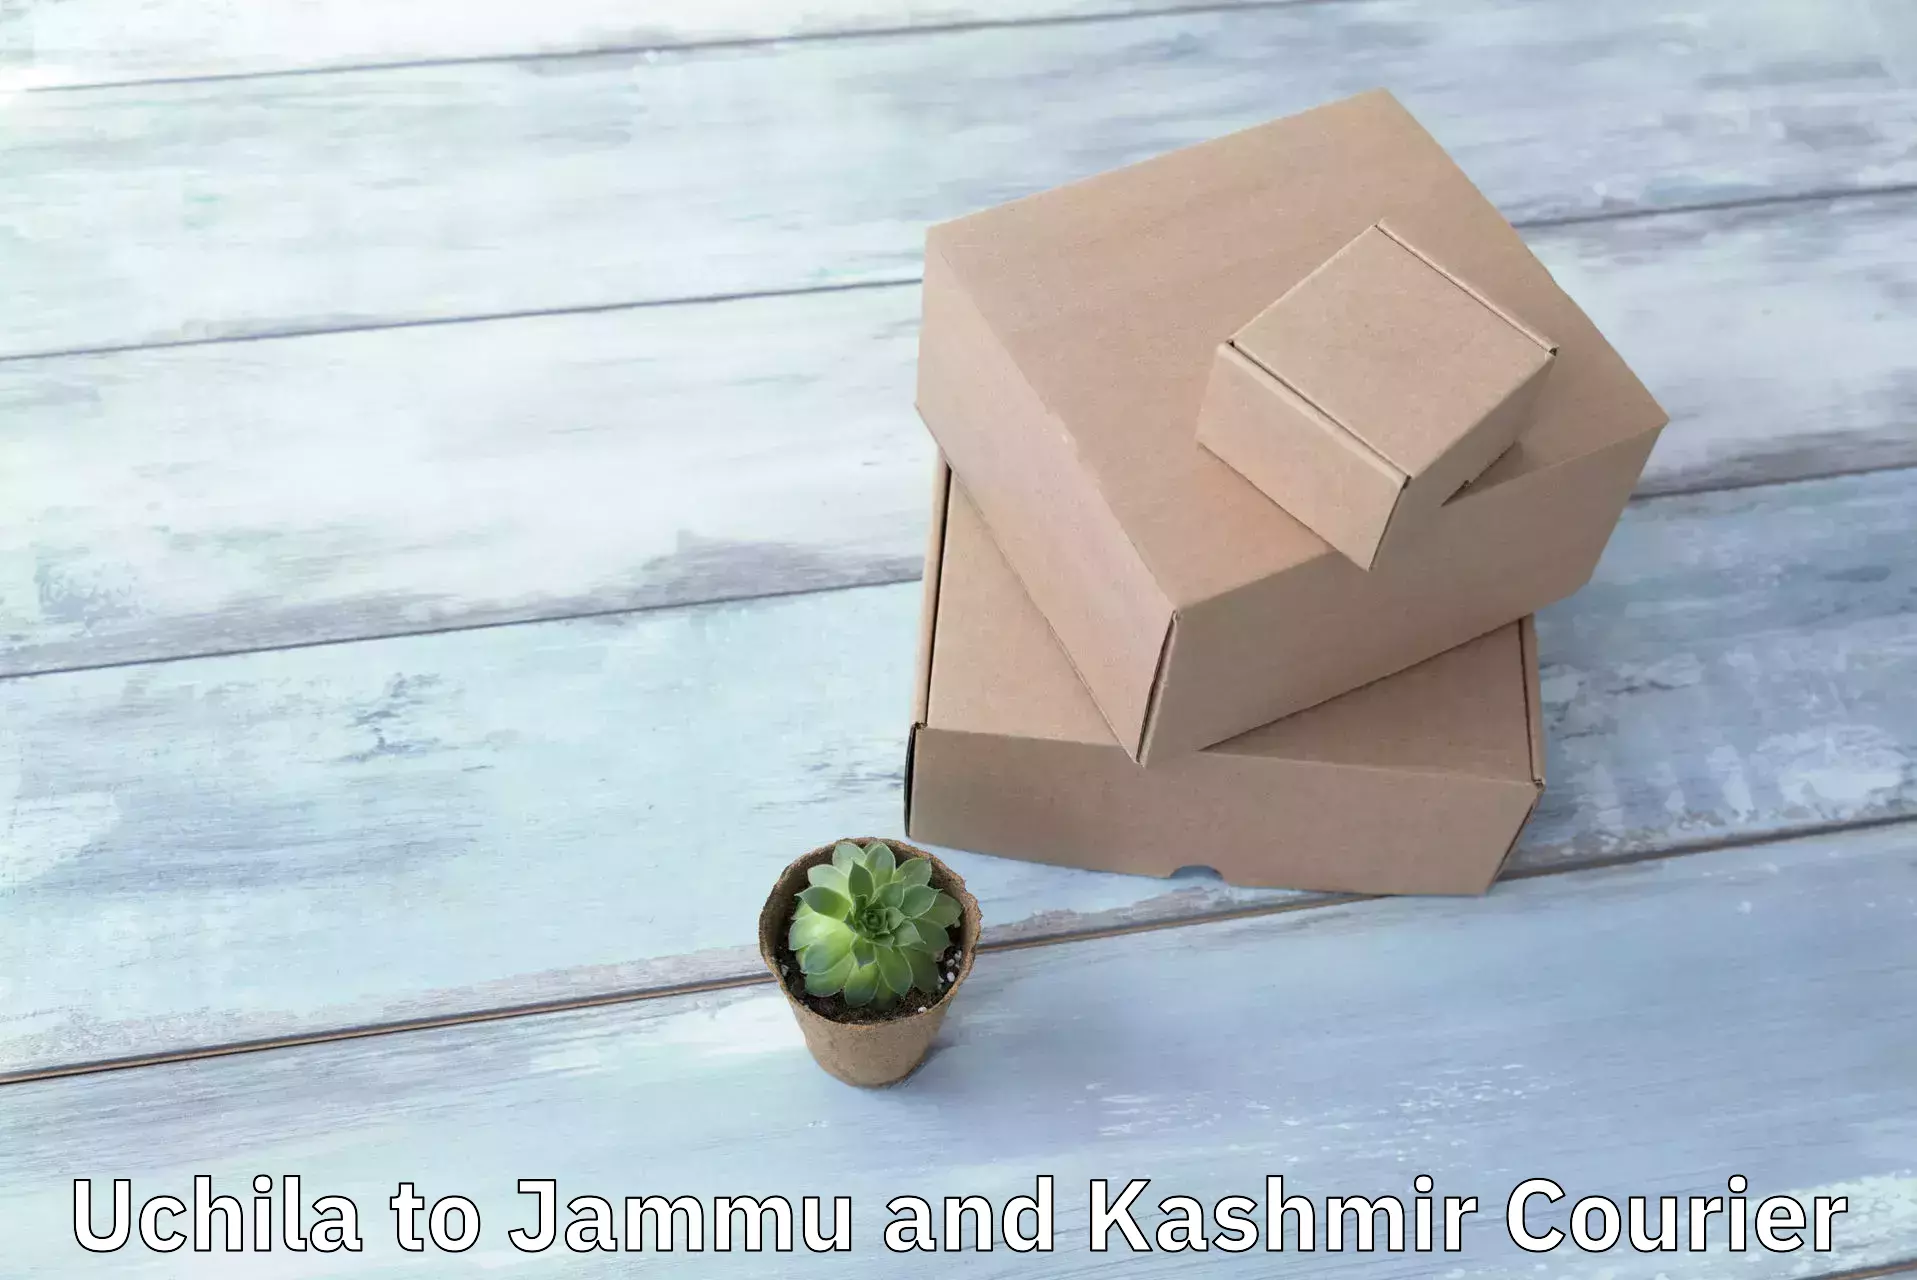 Digital courier platforms Uchila to Jammu and Kashmir